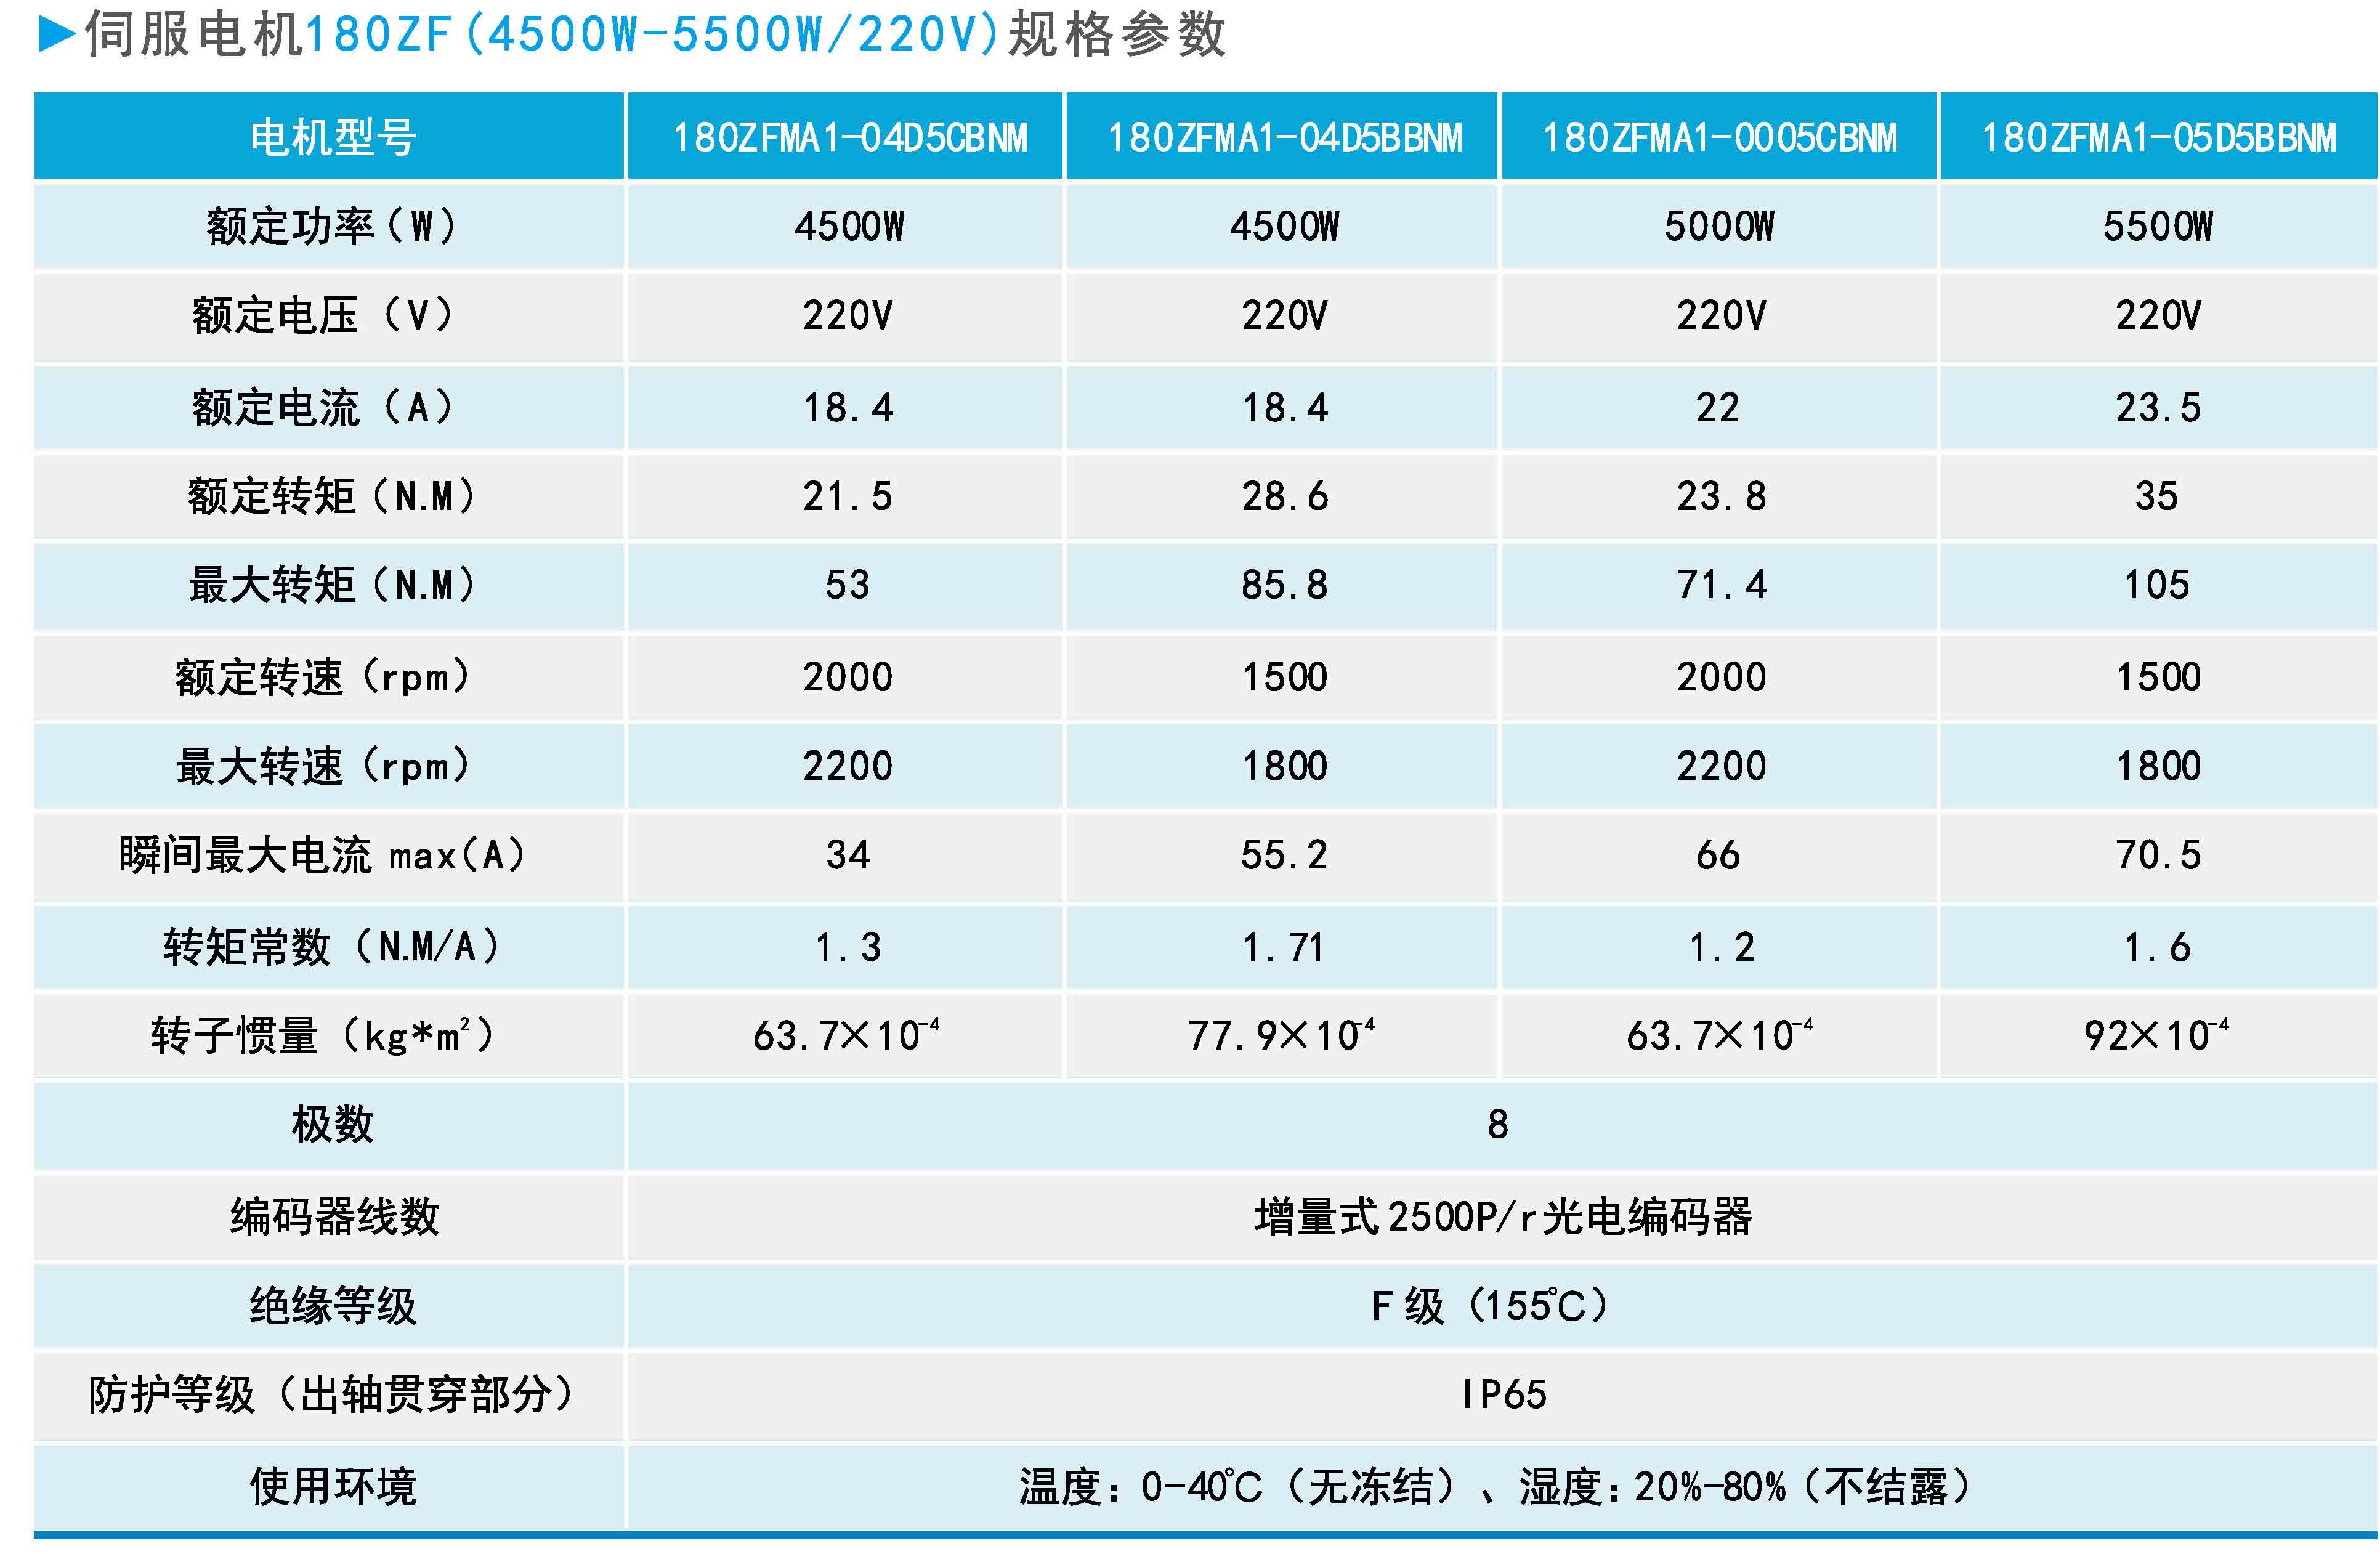 ZF180(4500W-5500W 220V)系列通用型伺服电机规格参数.jpg